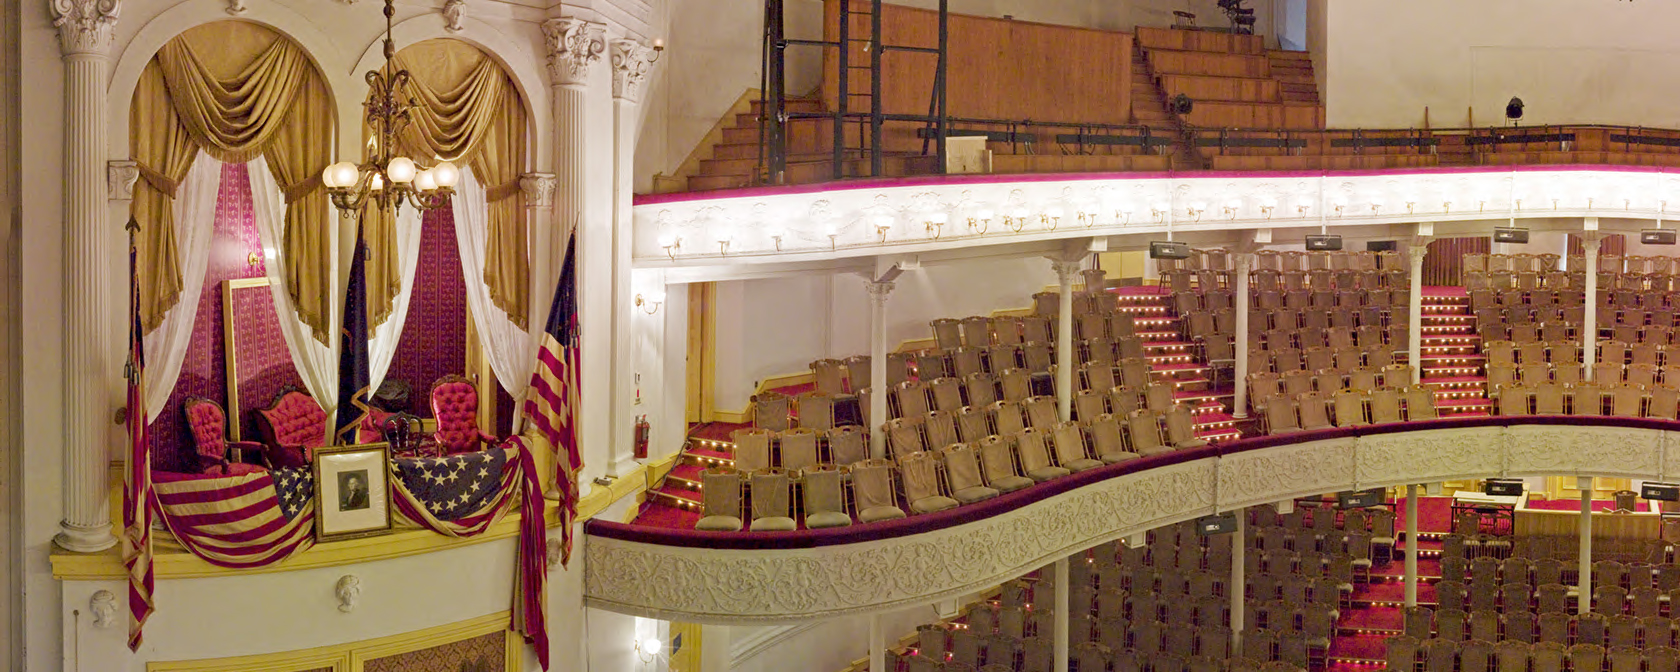 Vista panorámica del teatro Ford